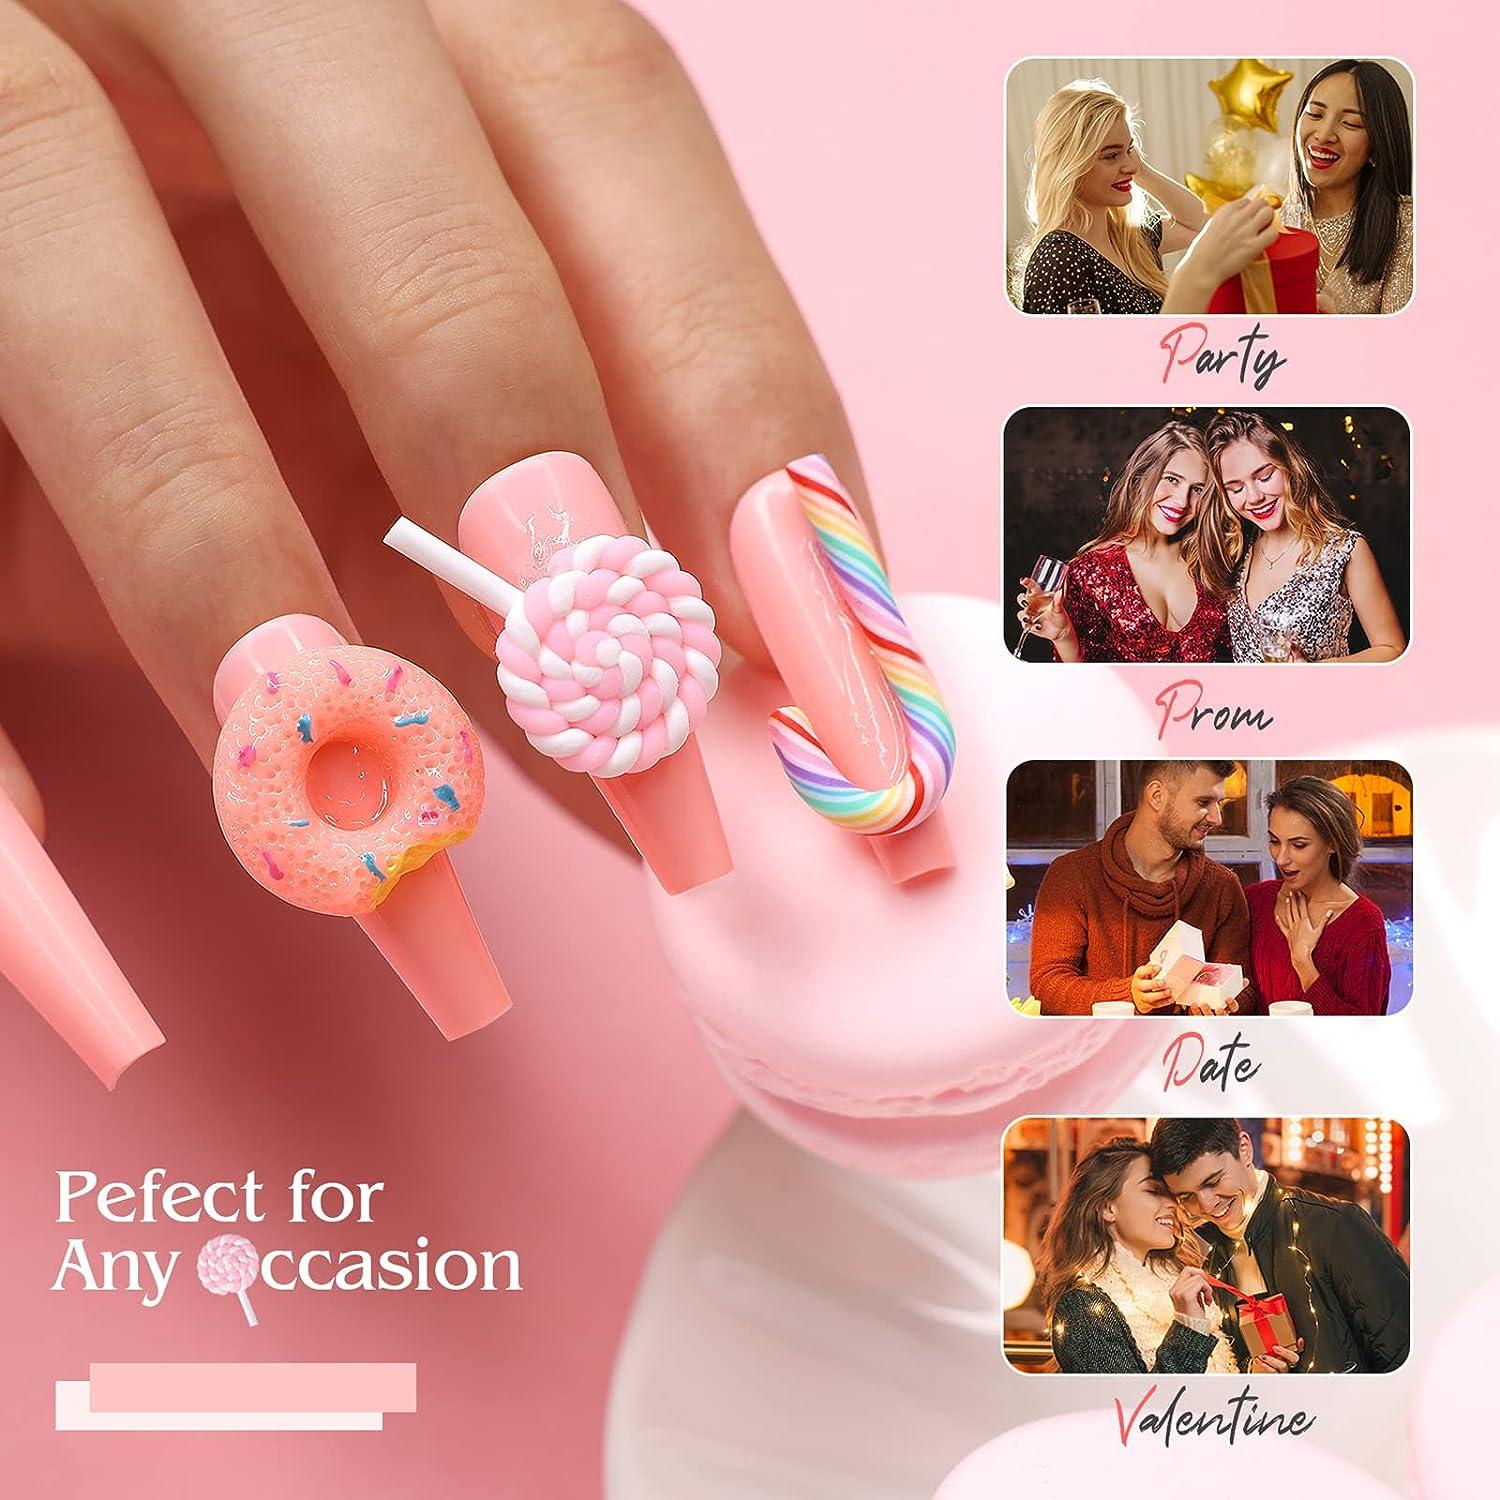 Set 24 pcs Nail sticker 3D fashion design multicolor for nail